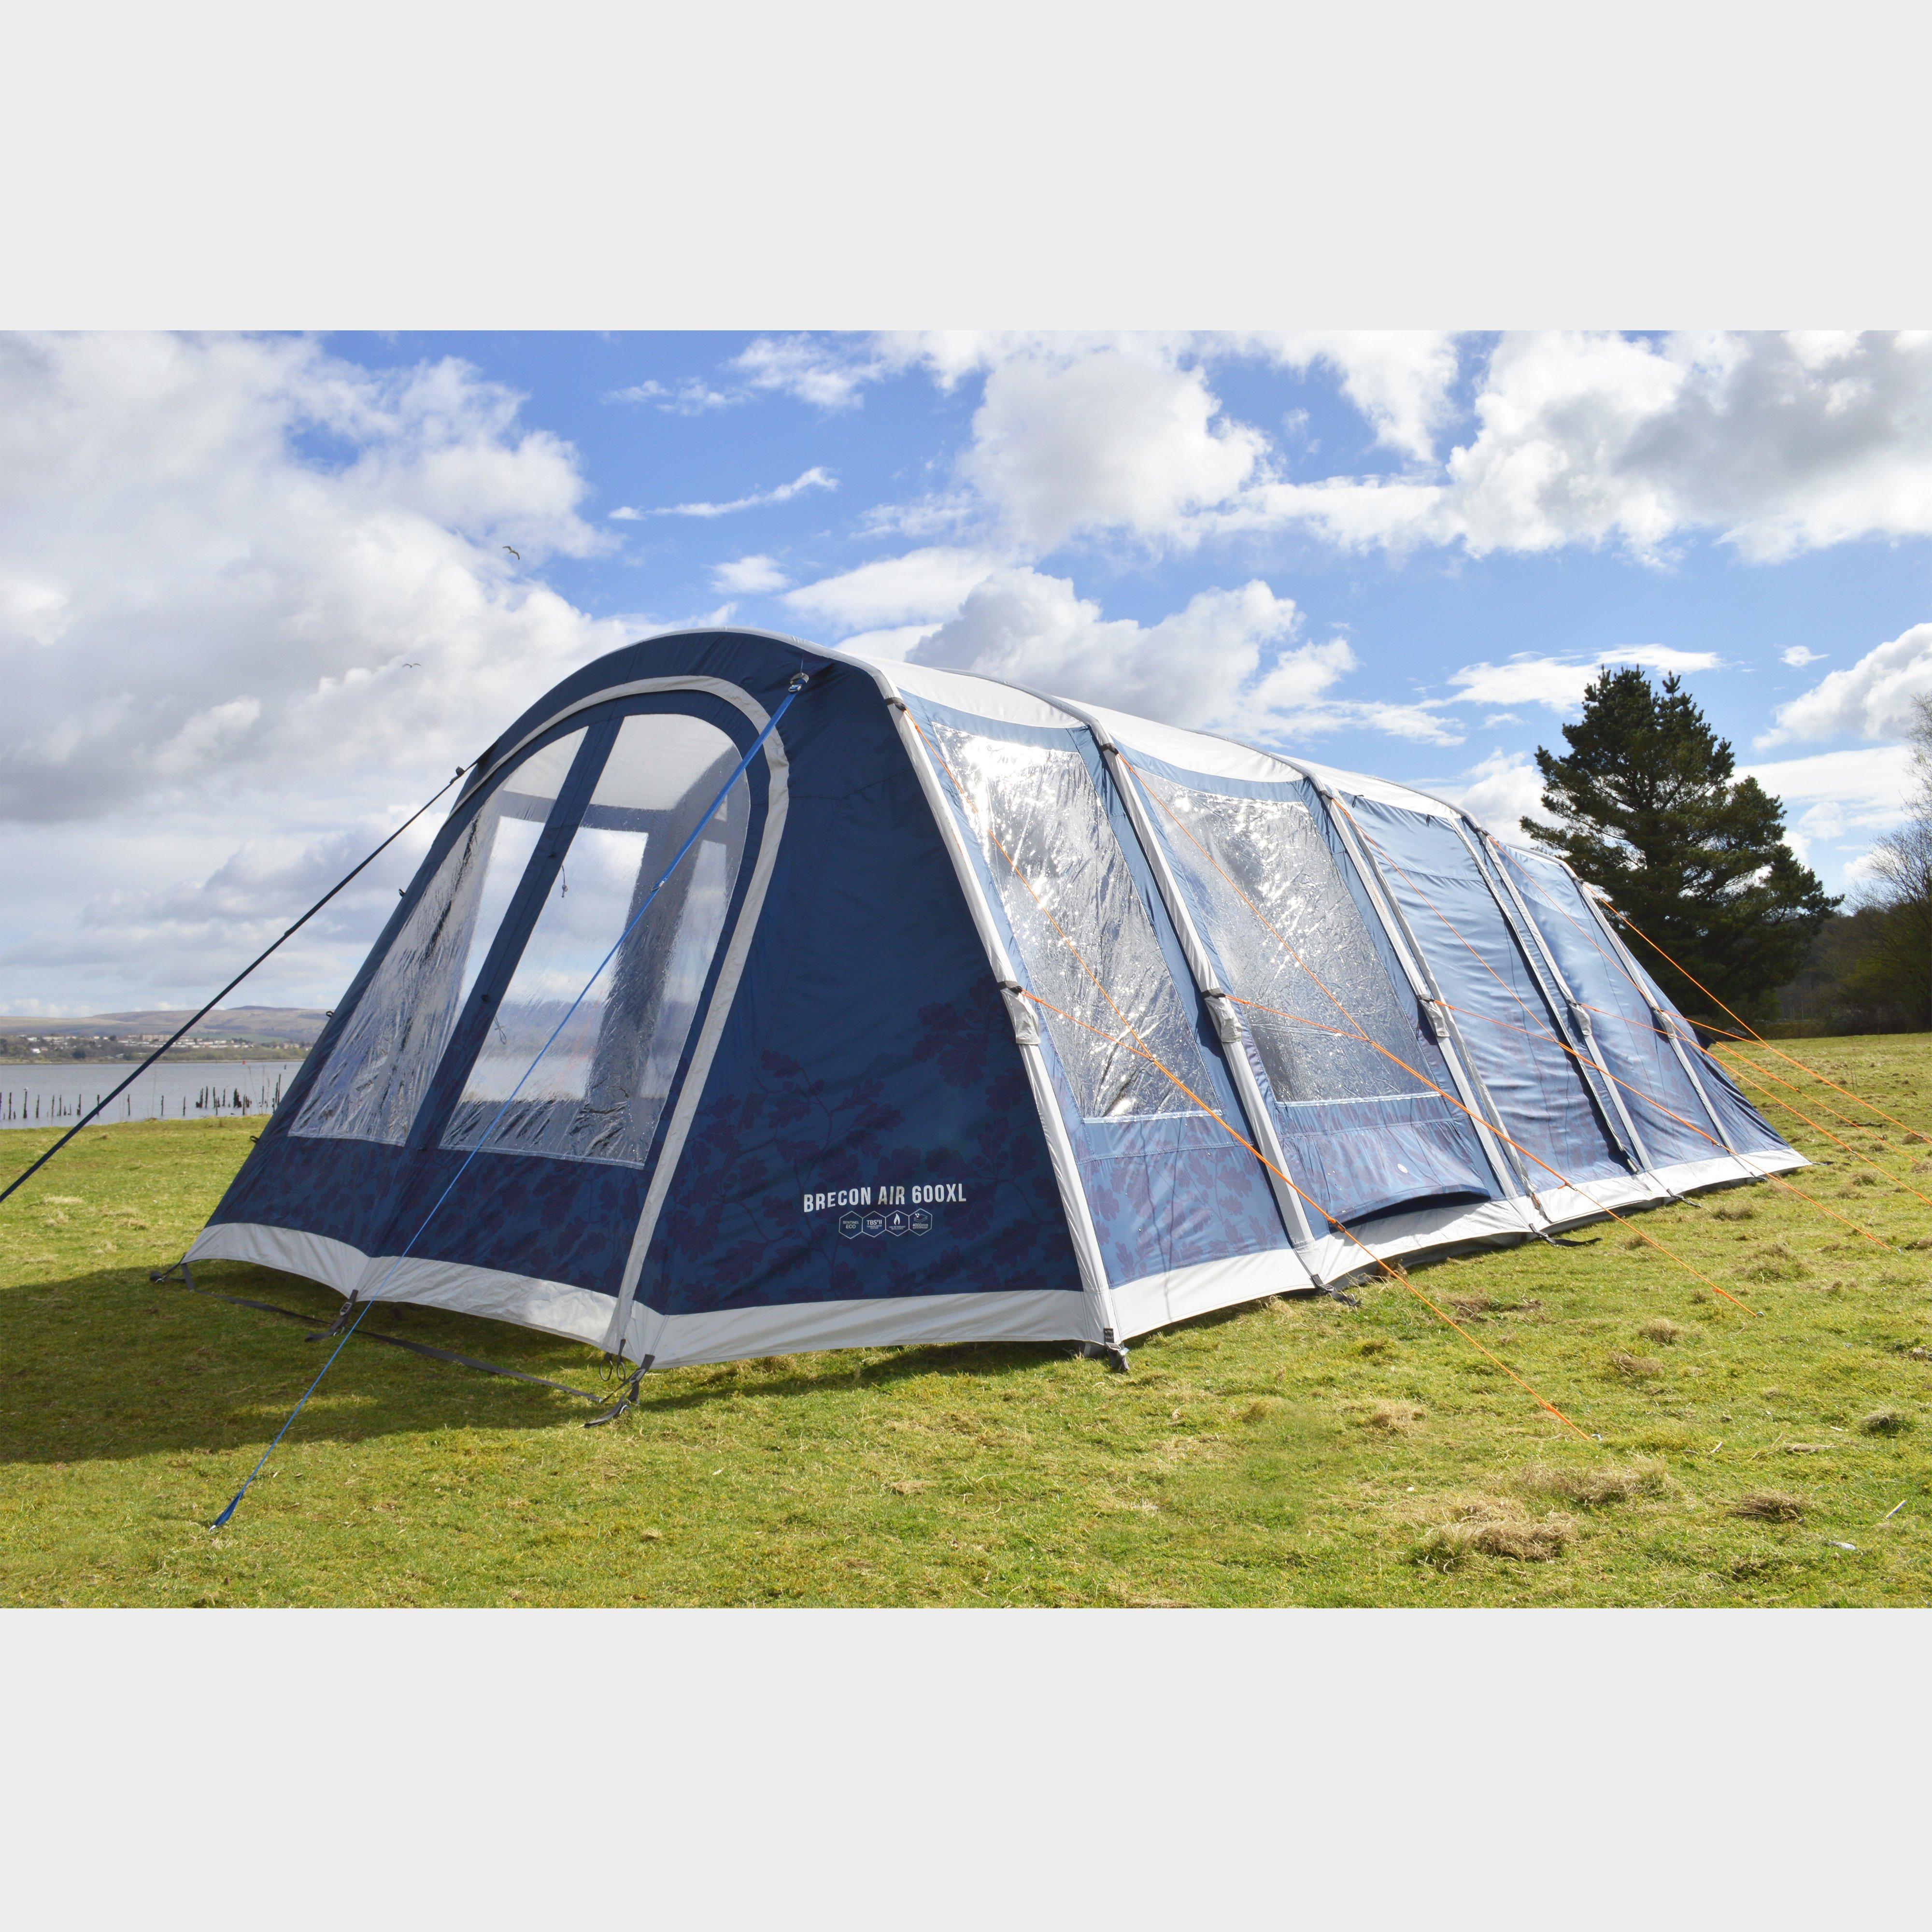  VANGO Brecon Air 600 XL National Trust Edition Air Tent, Navy